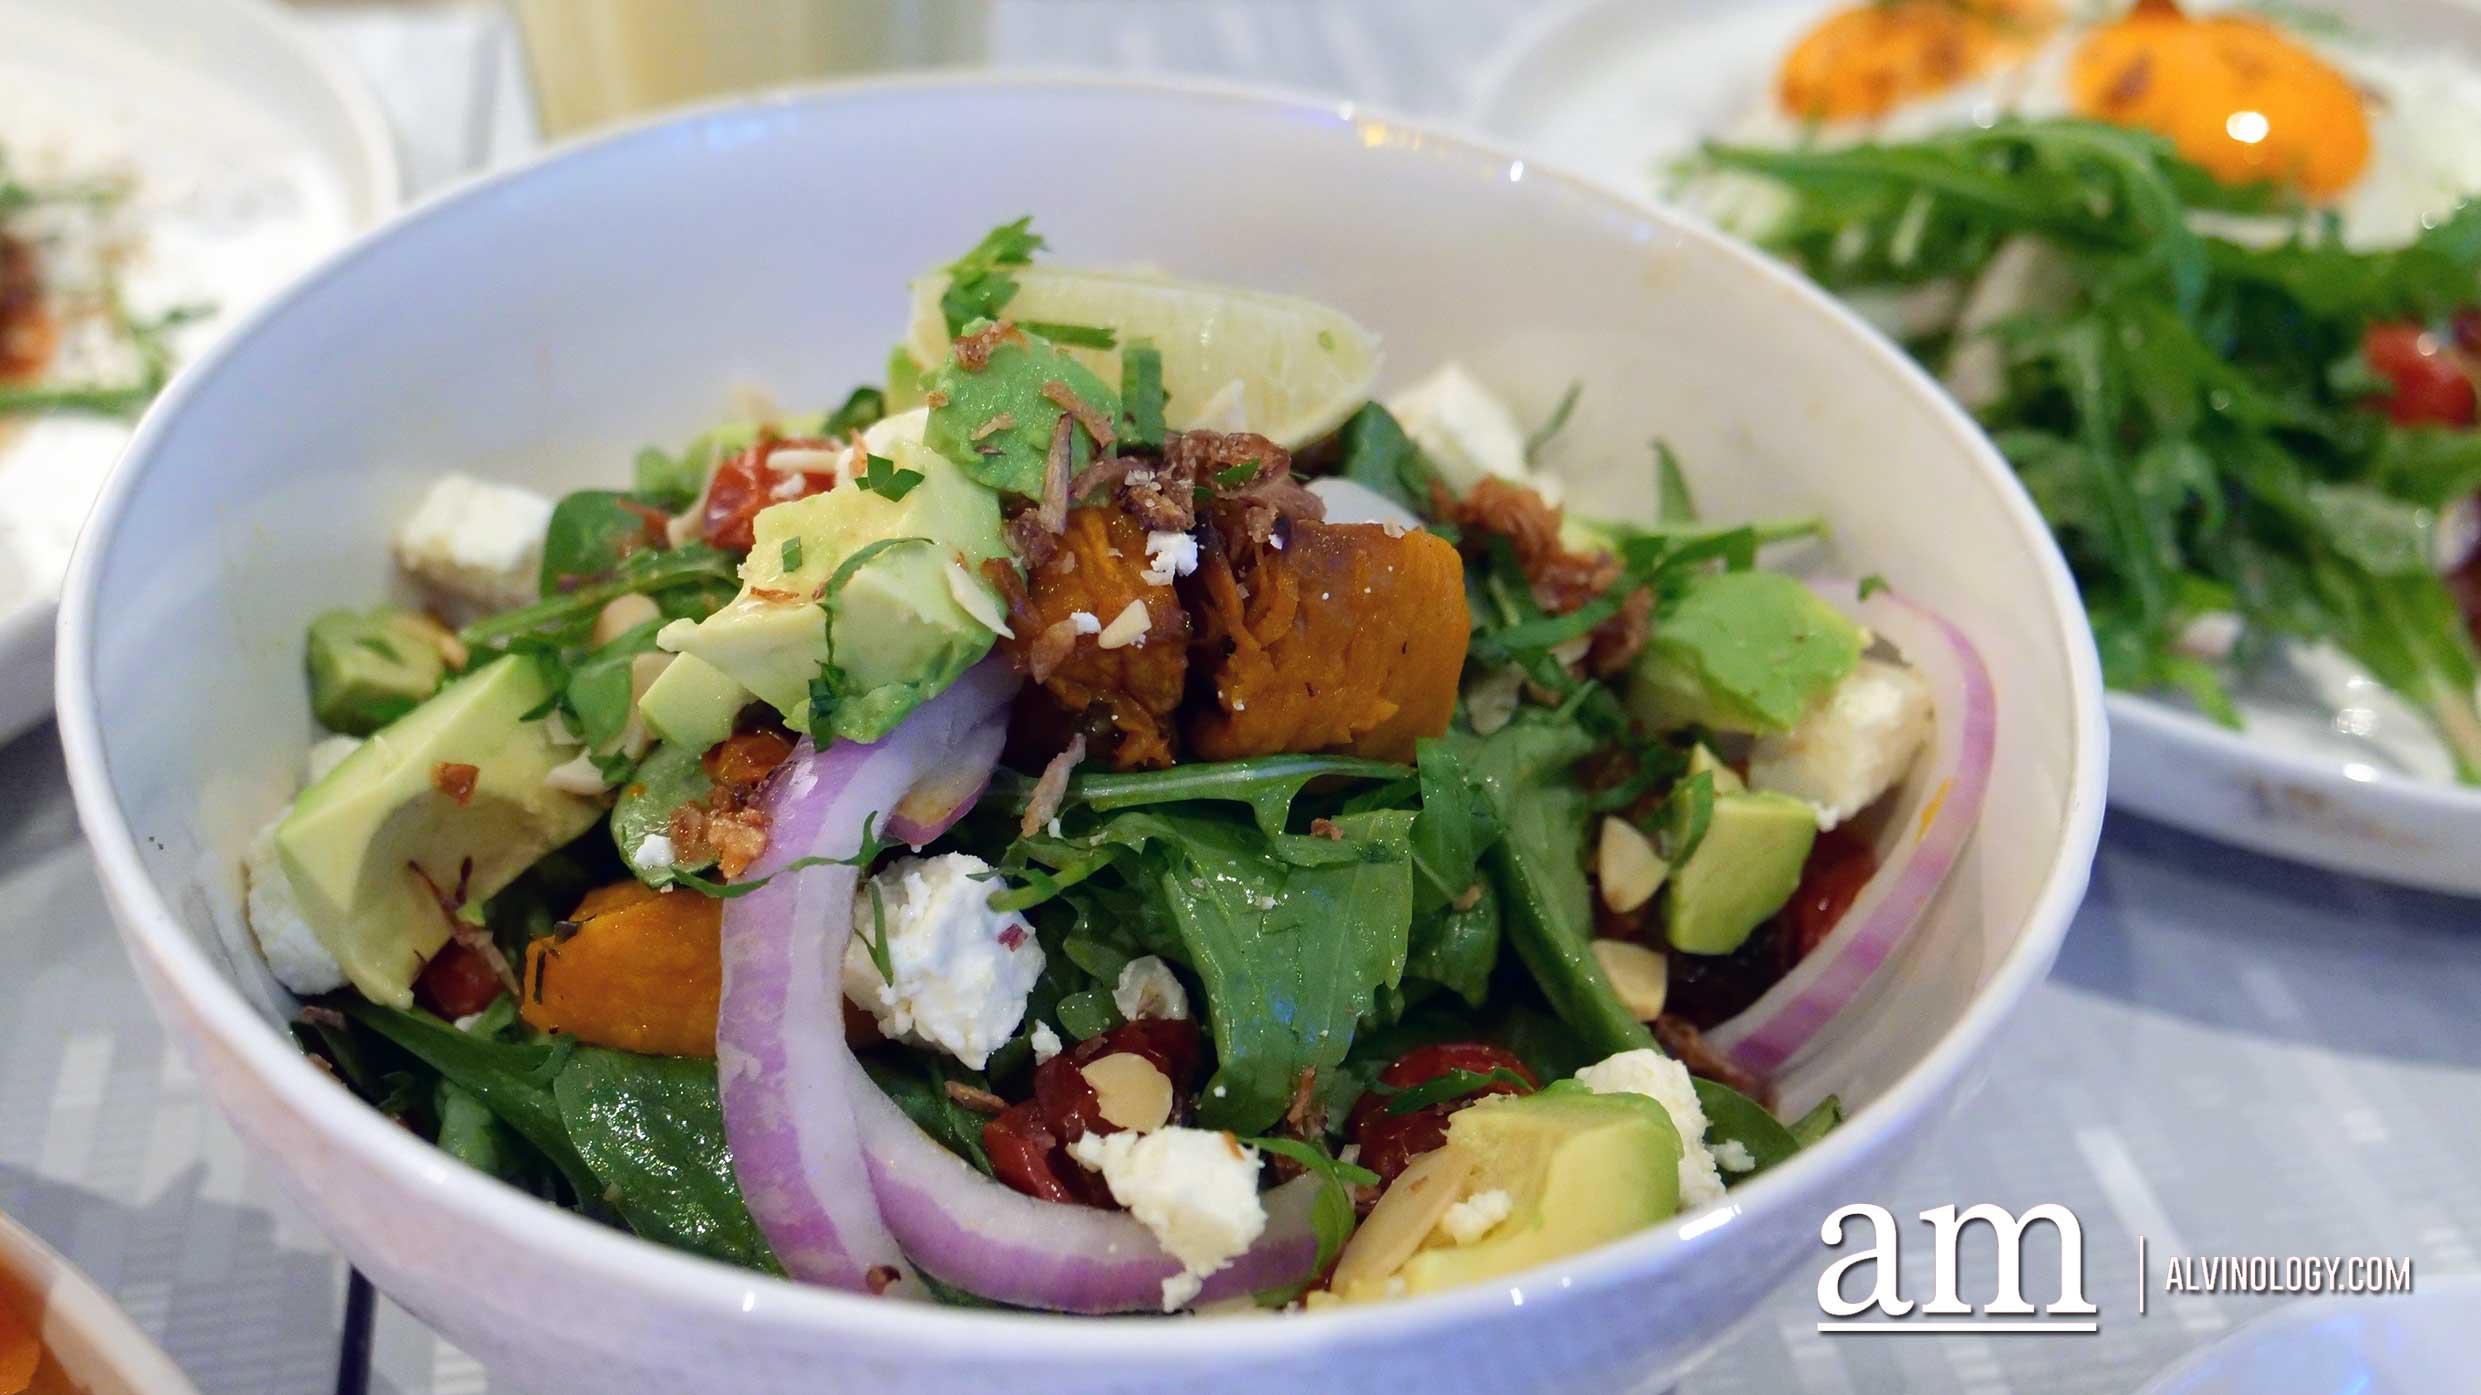 Pumpkin and Feta Salad (S$13) - avocado, almond flake, rocket, spinach, roasted potato 